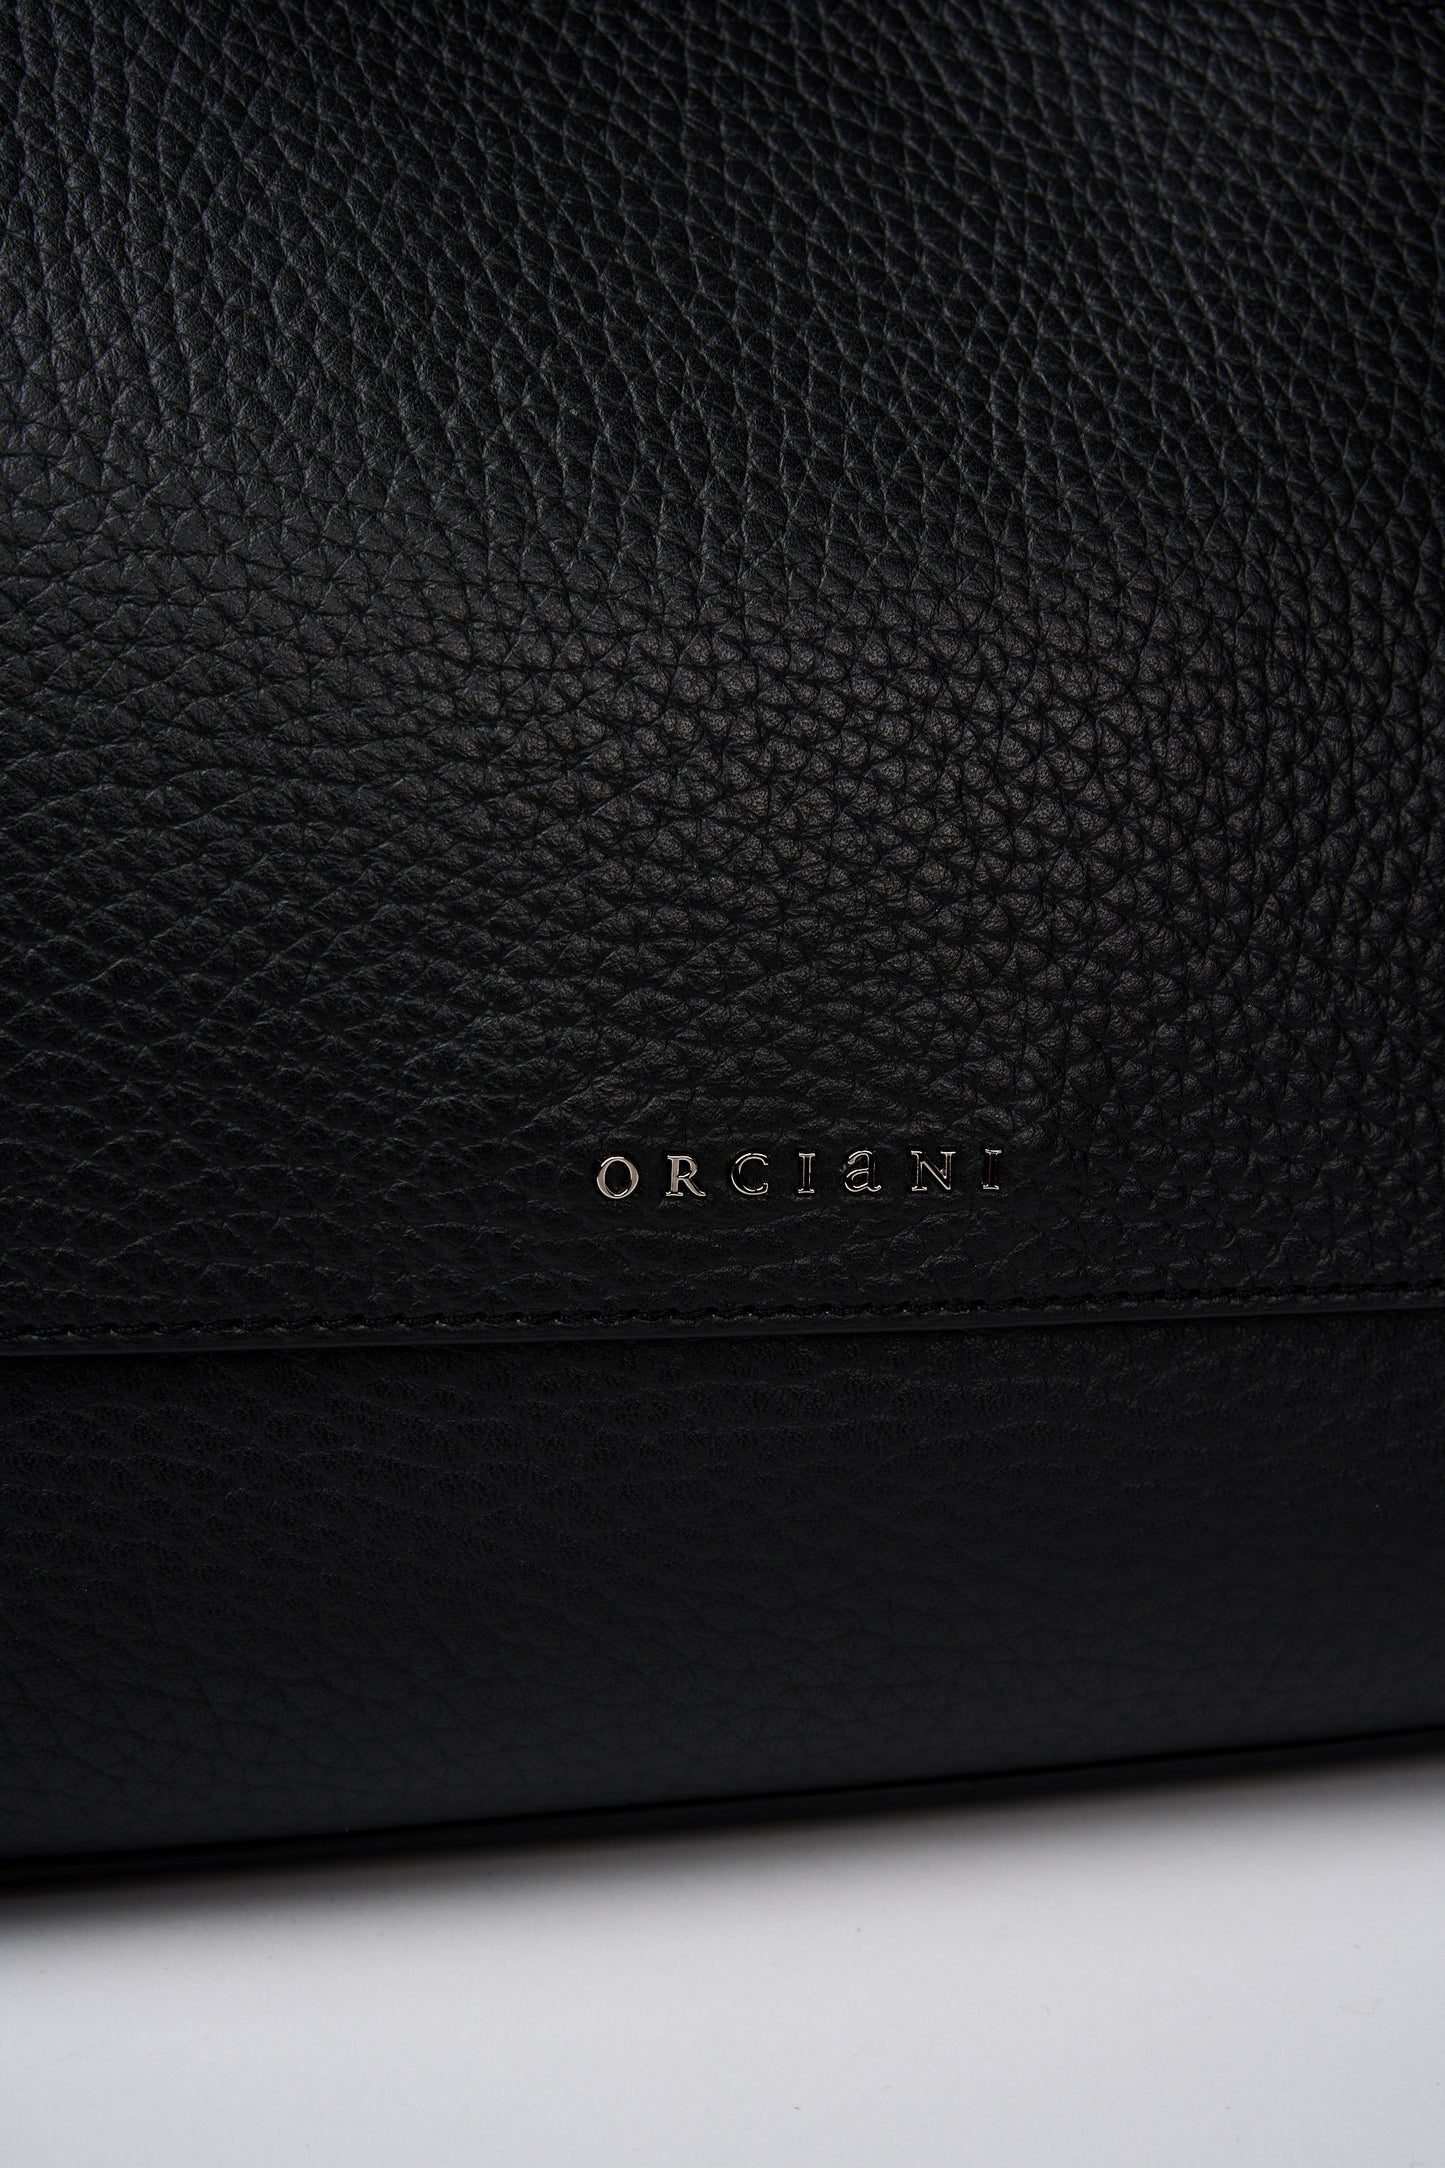  Orciani Sveva Medium Black Leather Bag Nero Donna - 4